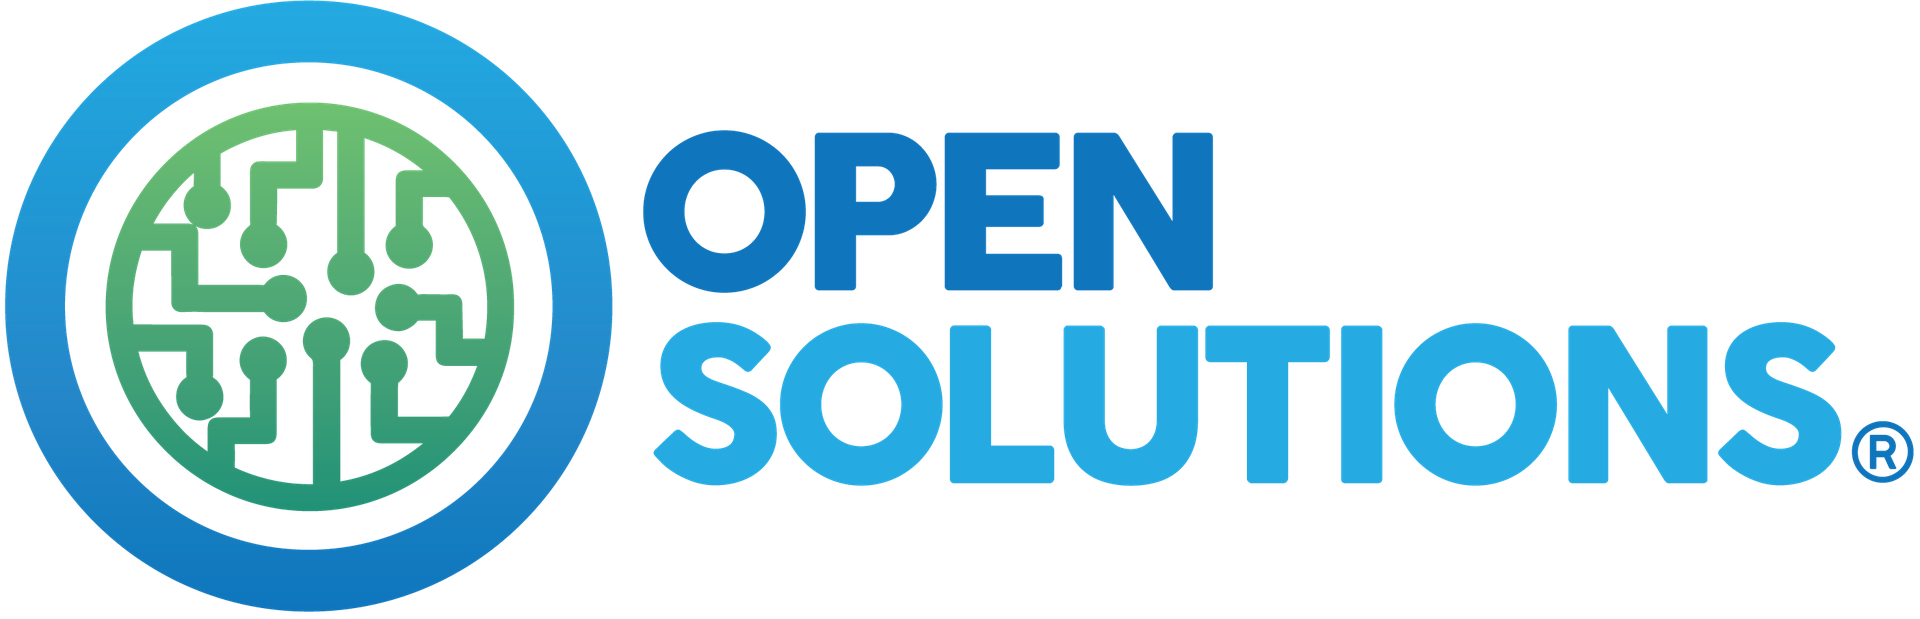 Open Solutions LTD